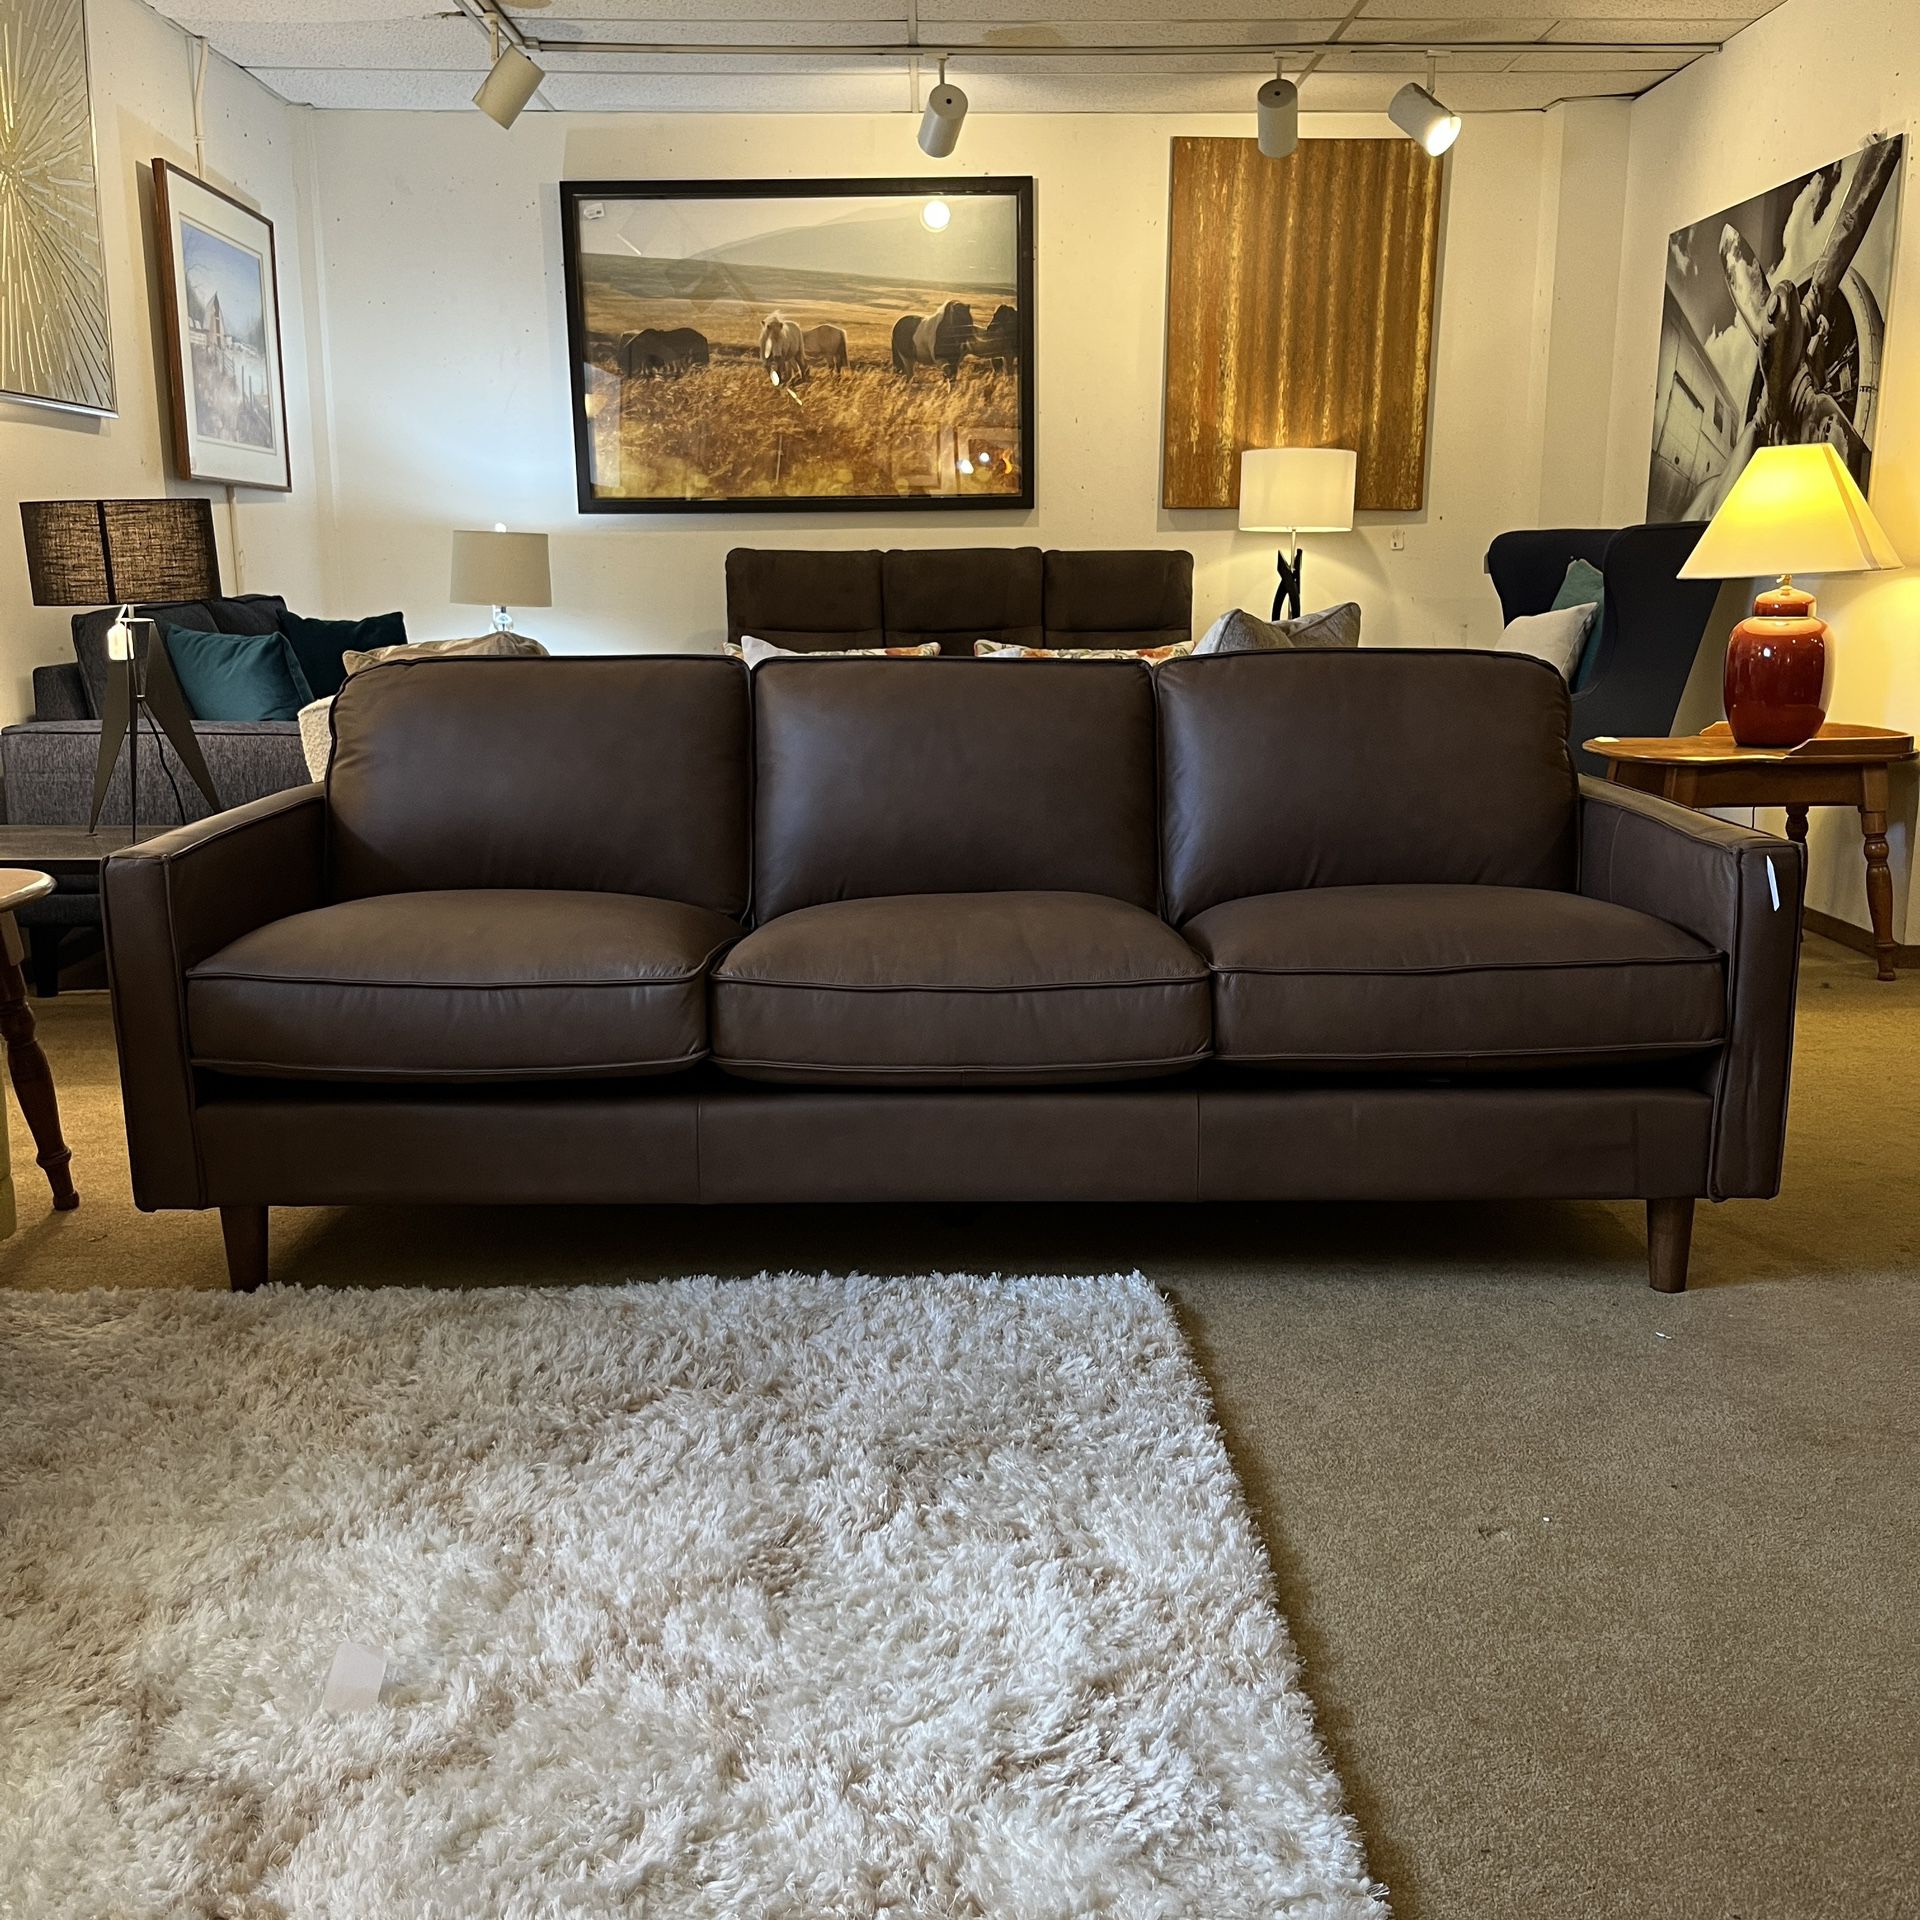 Top Grain Brown Leather Sofa